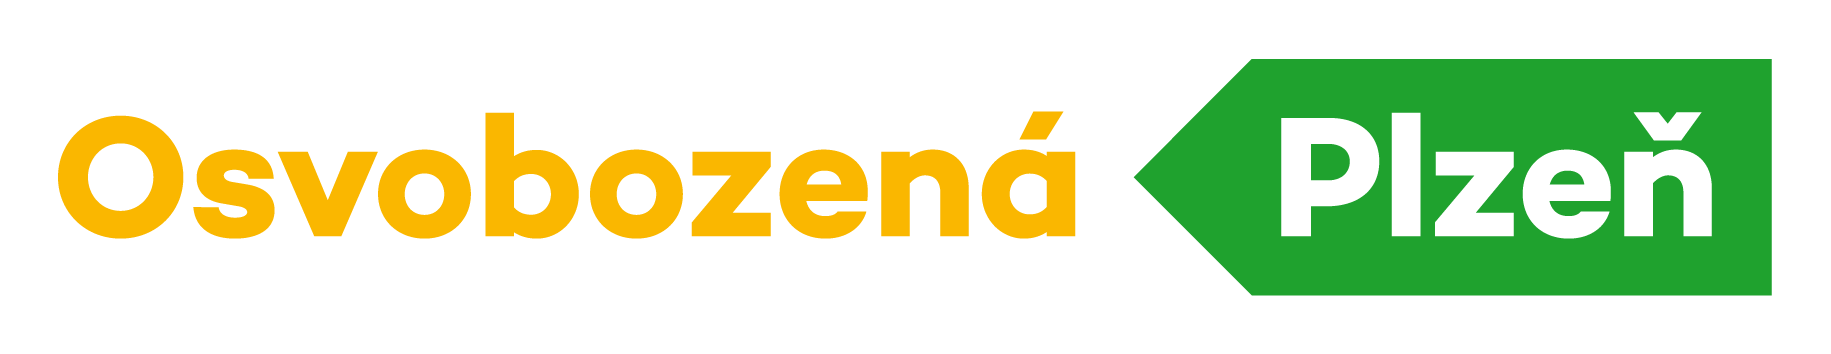 Plzeň 2017